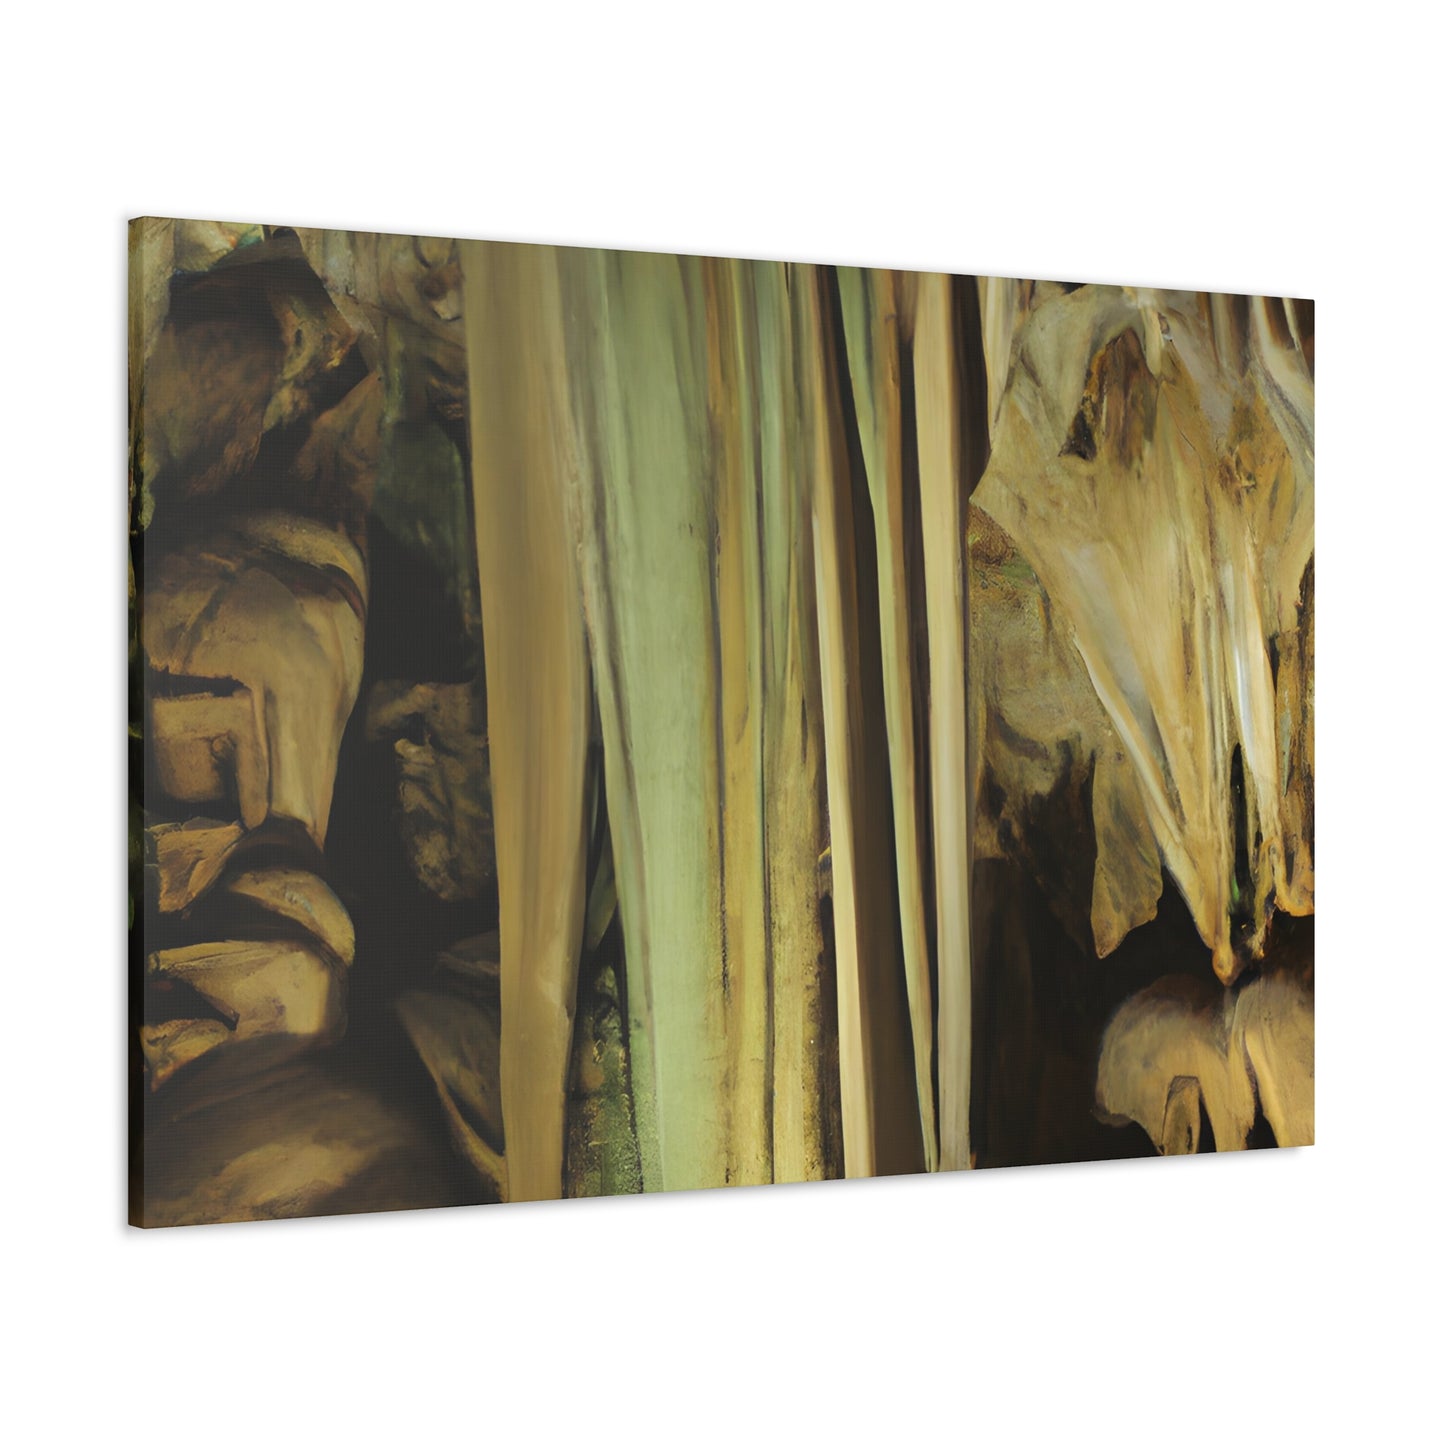 Ella's Unifying Caverns - Canvas